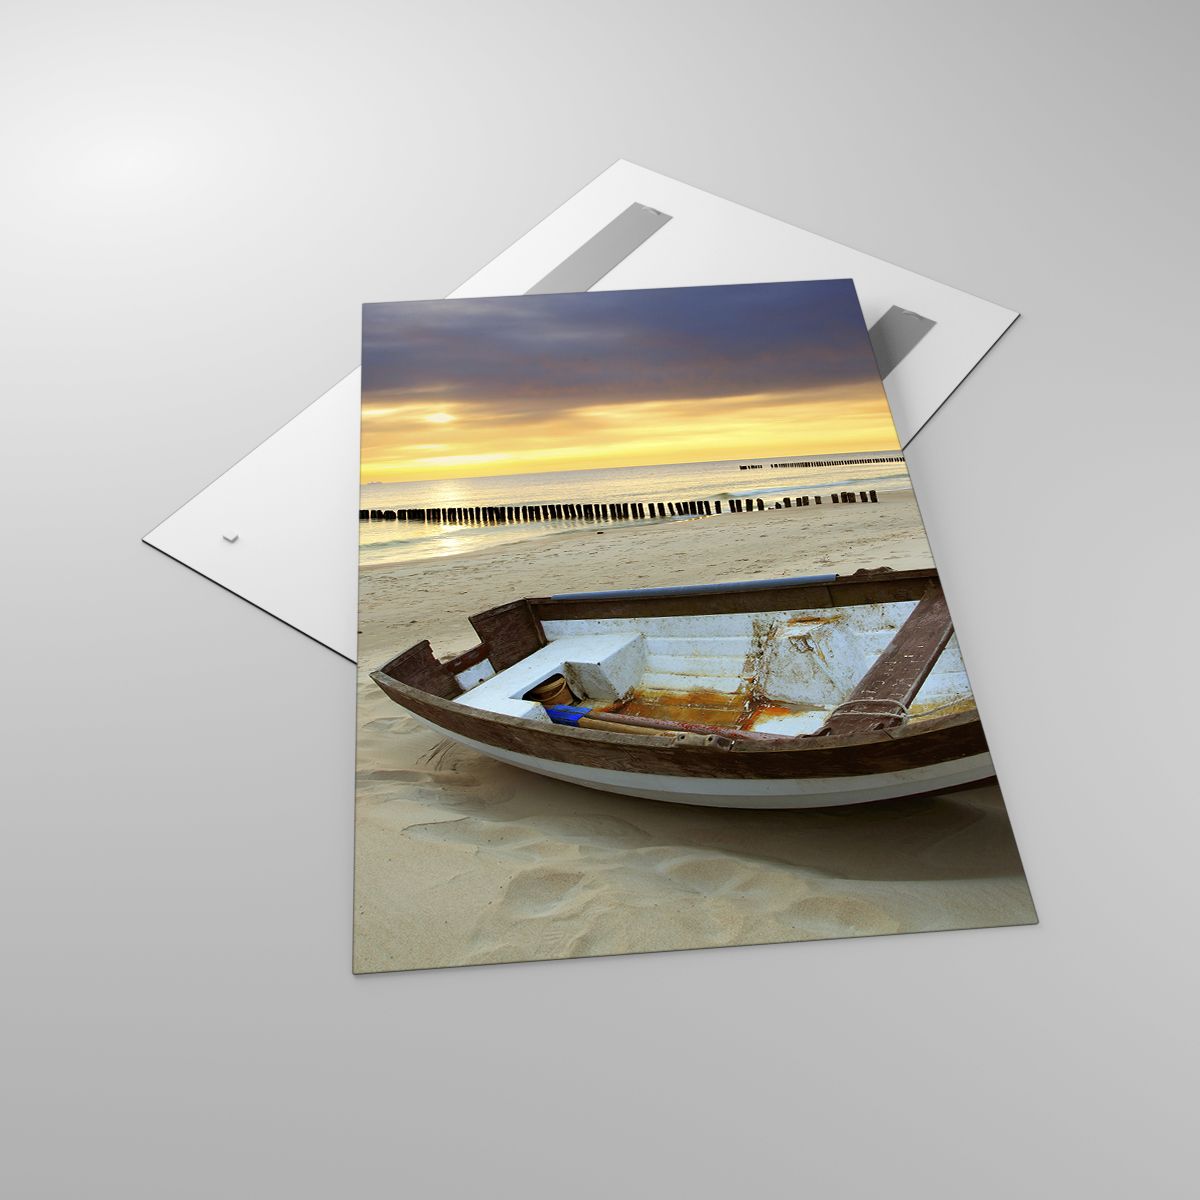 Glasbild Landschaft, Glasbild Meer, Glasbild Strand, Glasbild Boot, Glasbild Der Sonnenuntergang